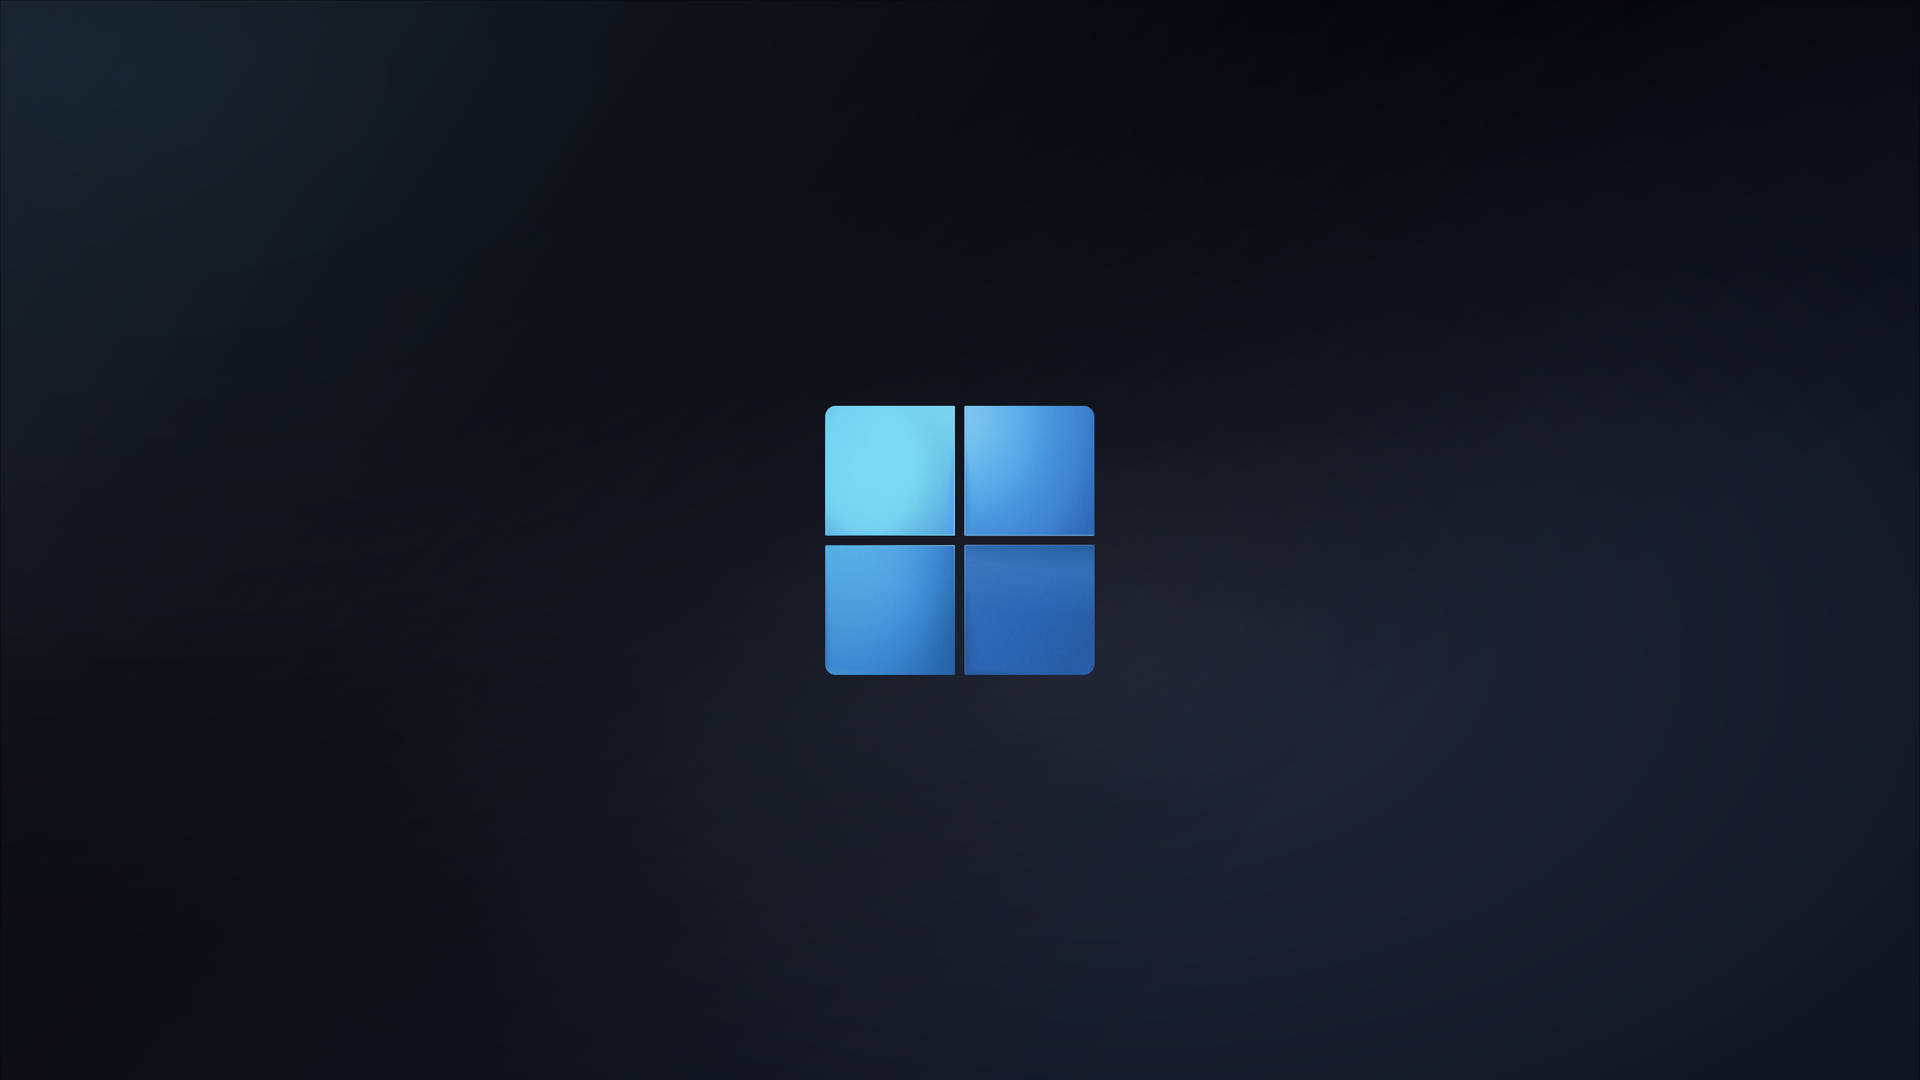 Windows 11 Wallpaper 4K, Dark aesthetic, Dark Mode, Waves